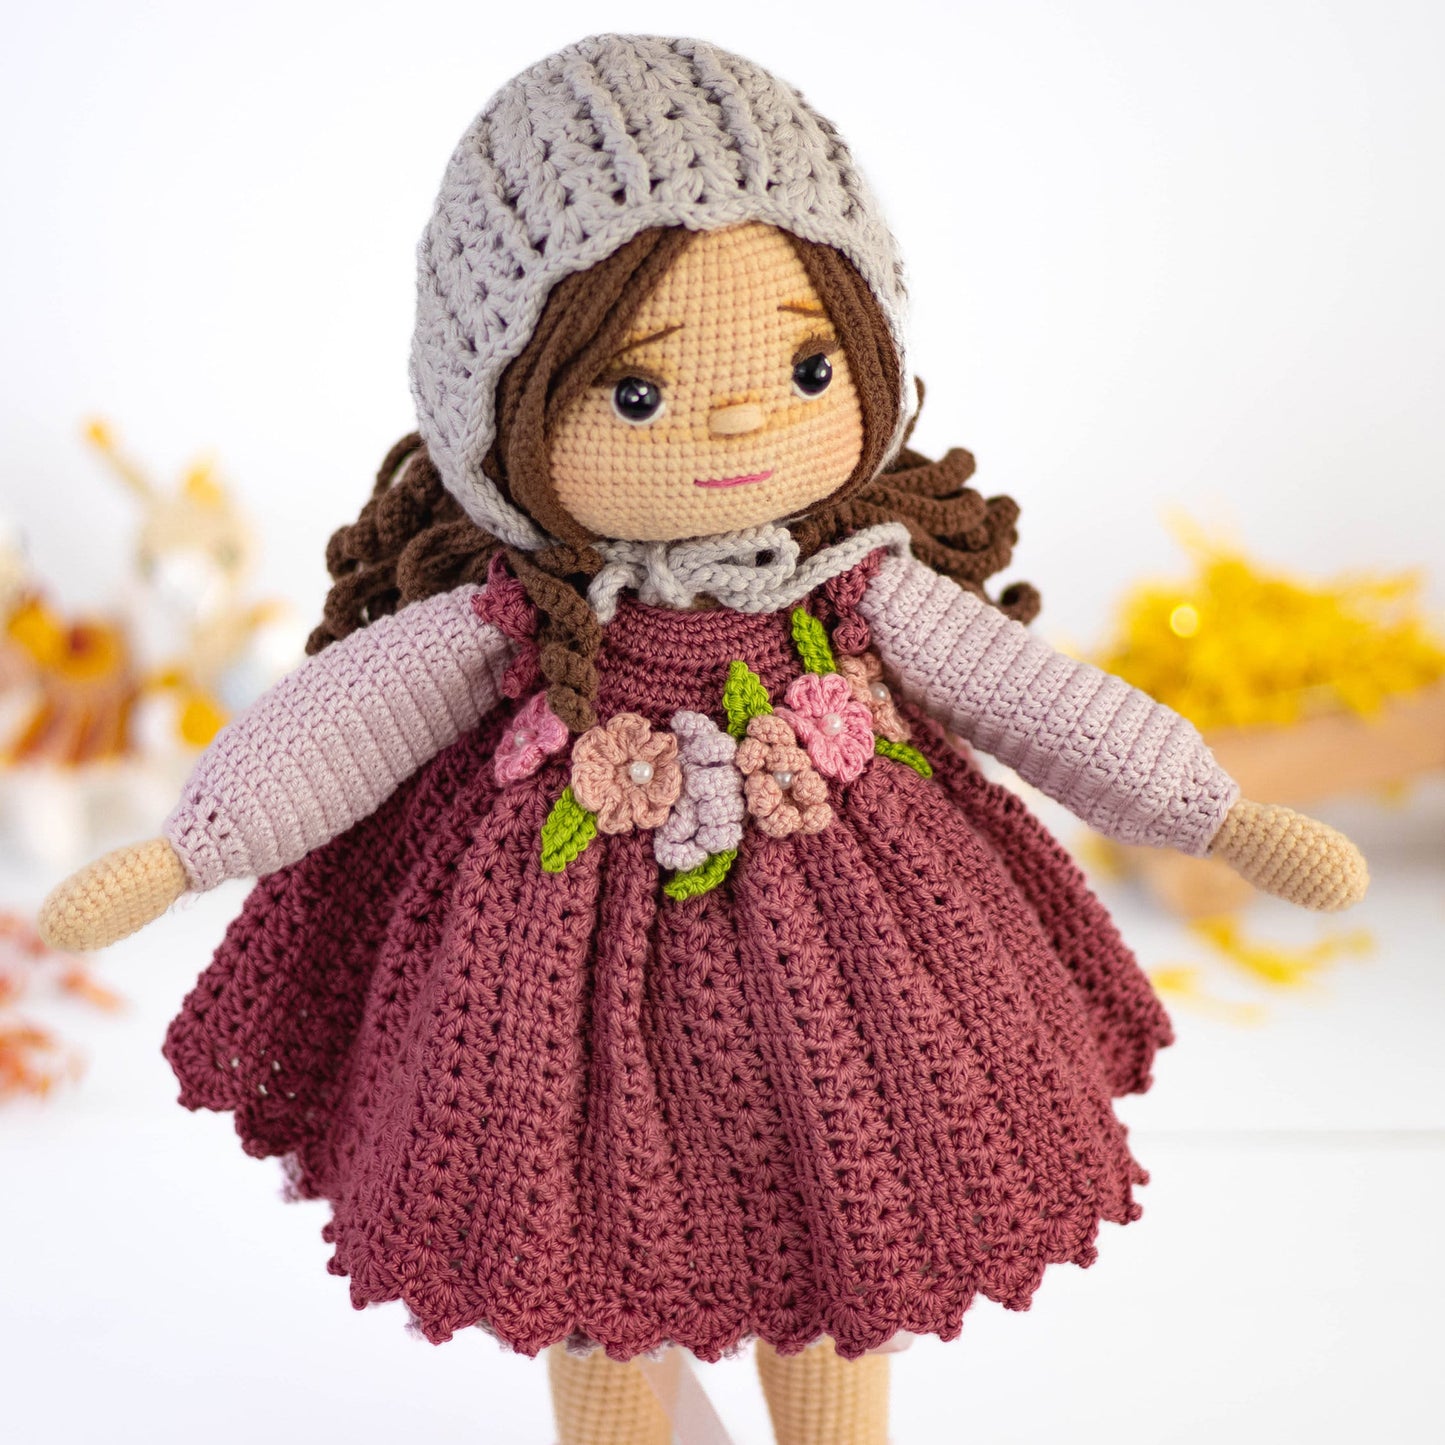 Vintage Girl, Crochet Doll, Knit Doll, Amigurumi Doll Finished